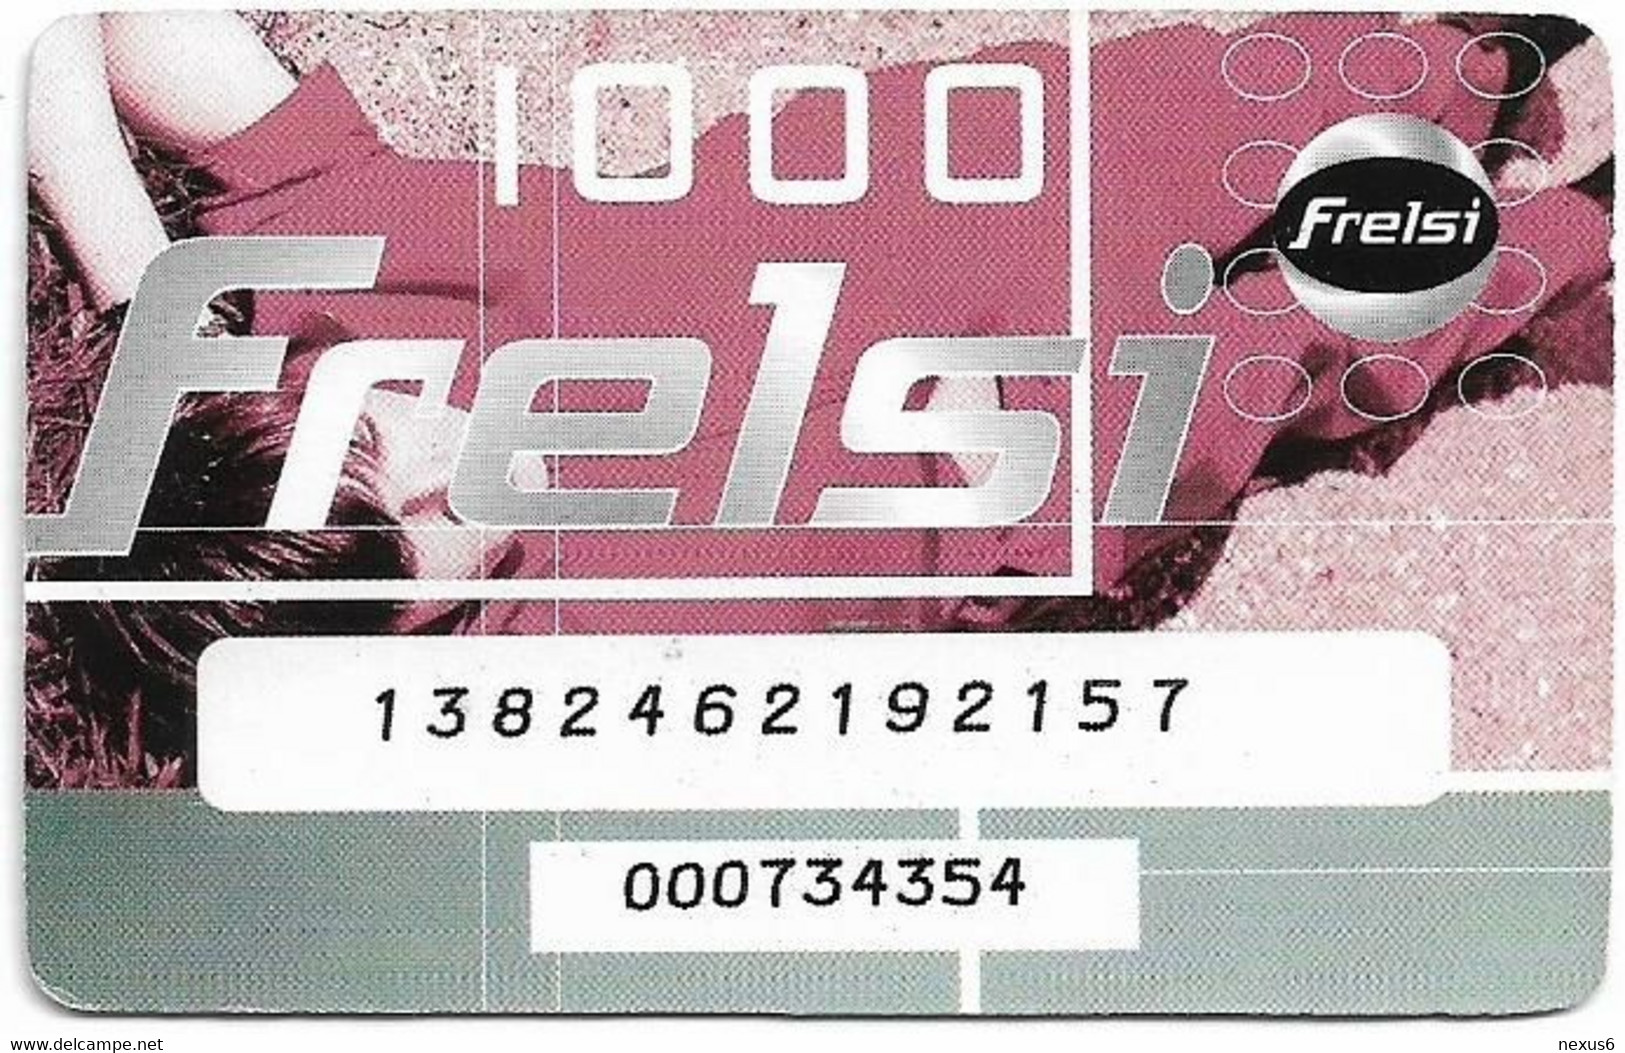 Iceland - Siminn - Frelsi, Lying Man, (Pink), PIN No. Type #2, GSM Refill 1.000Kr, Used - Islandia